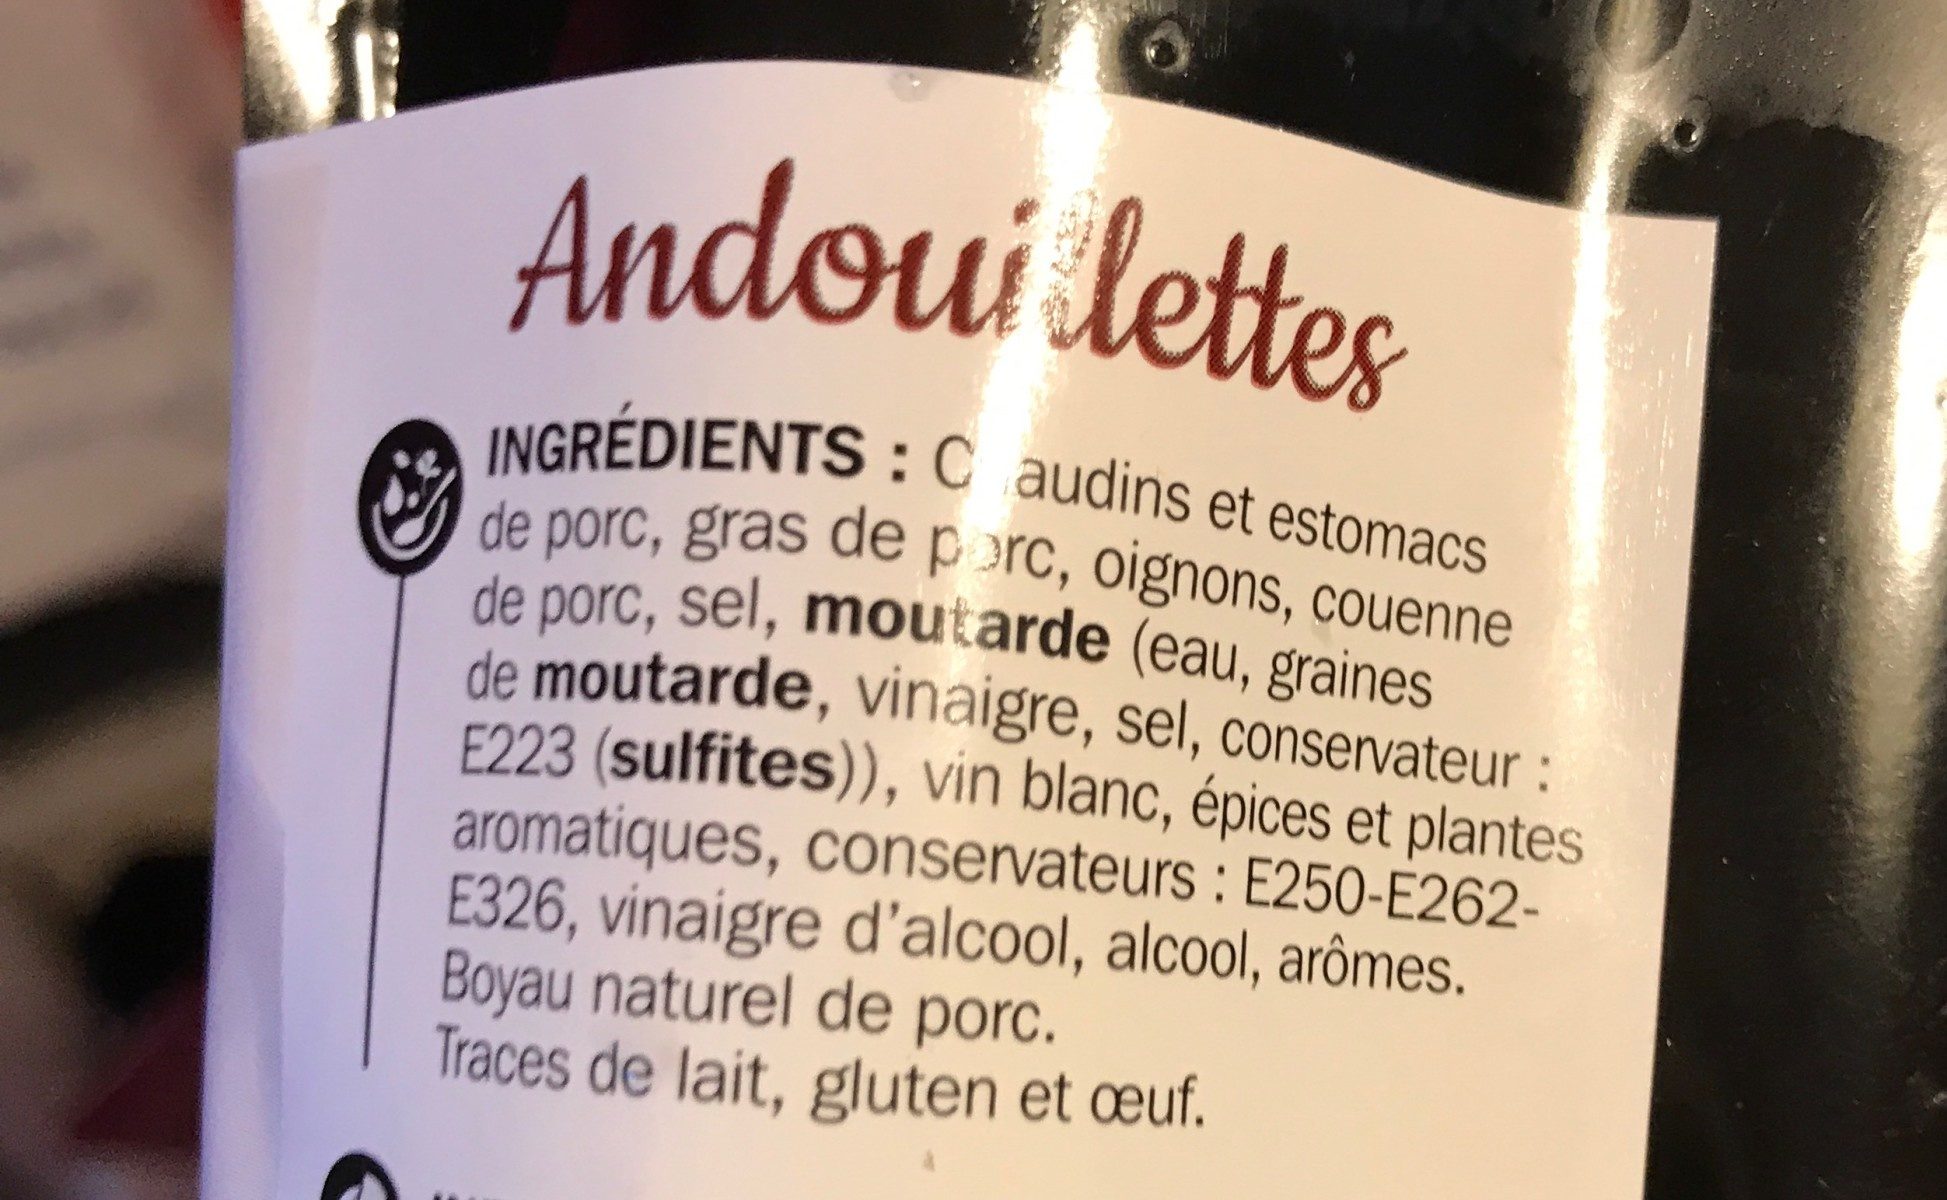 Andouillettes x 5 - Ingredients - fr